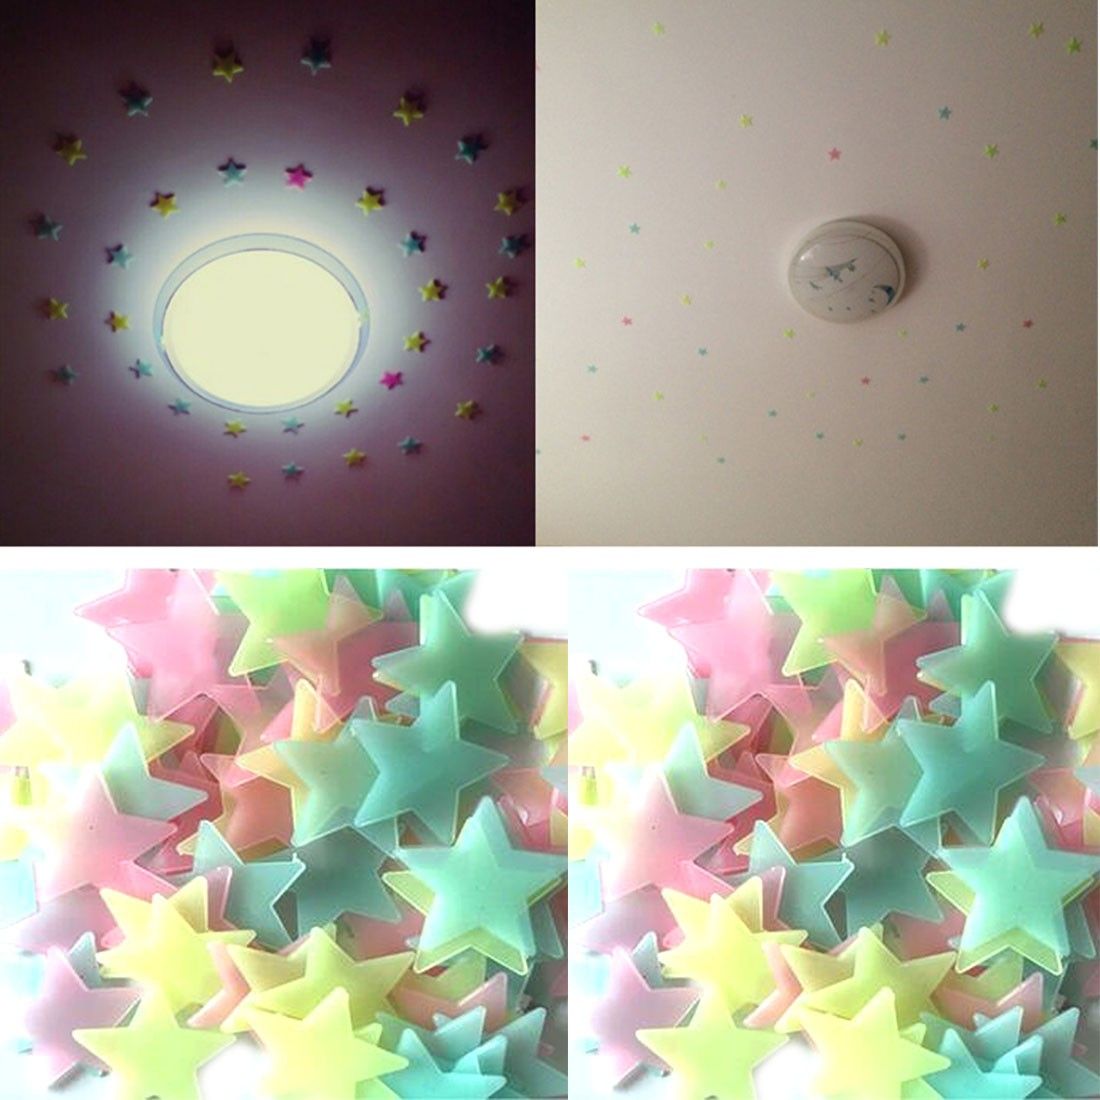 100pcs Luminous Star Stickers Art Decals Wall Door Window Home Decor Accessories 